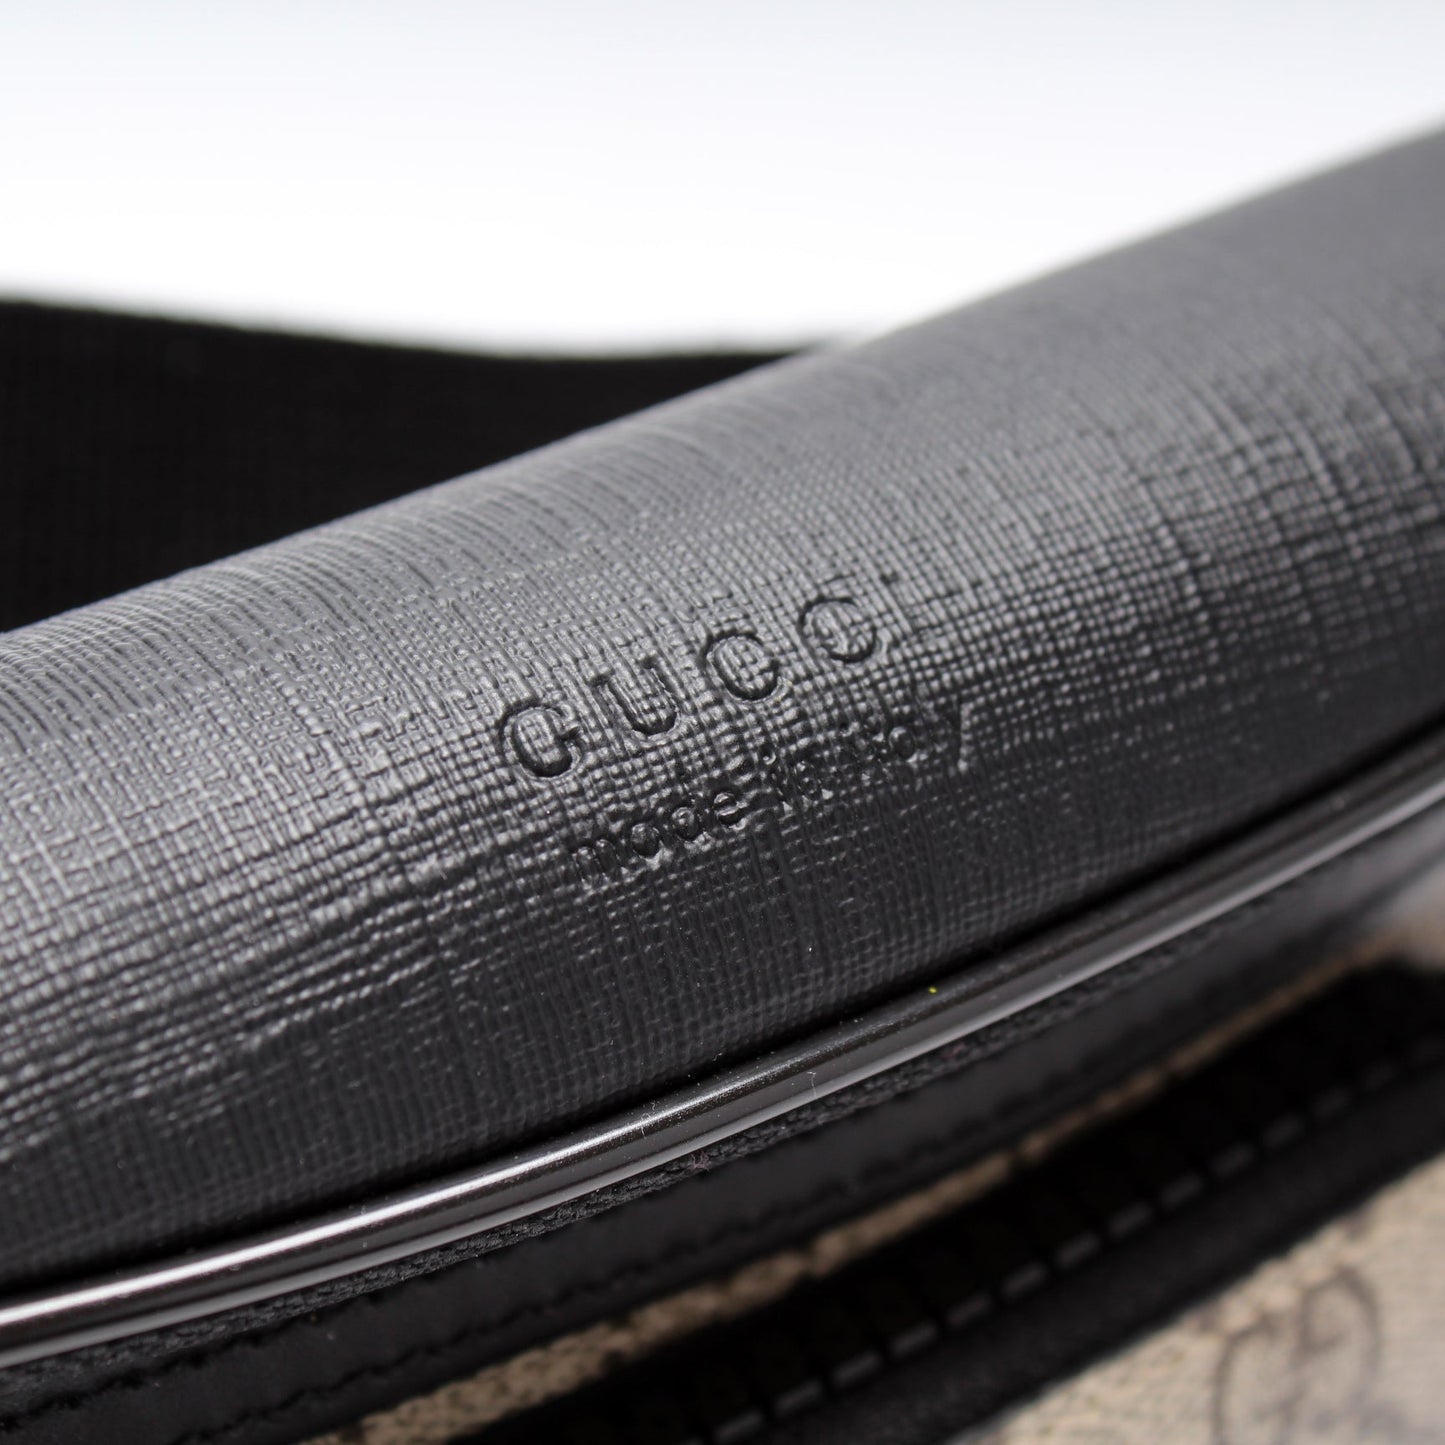 450946 Gucci Supreme Belt Bag